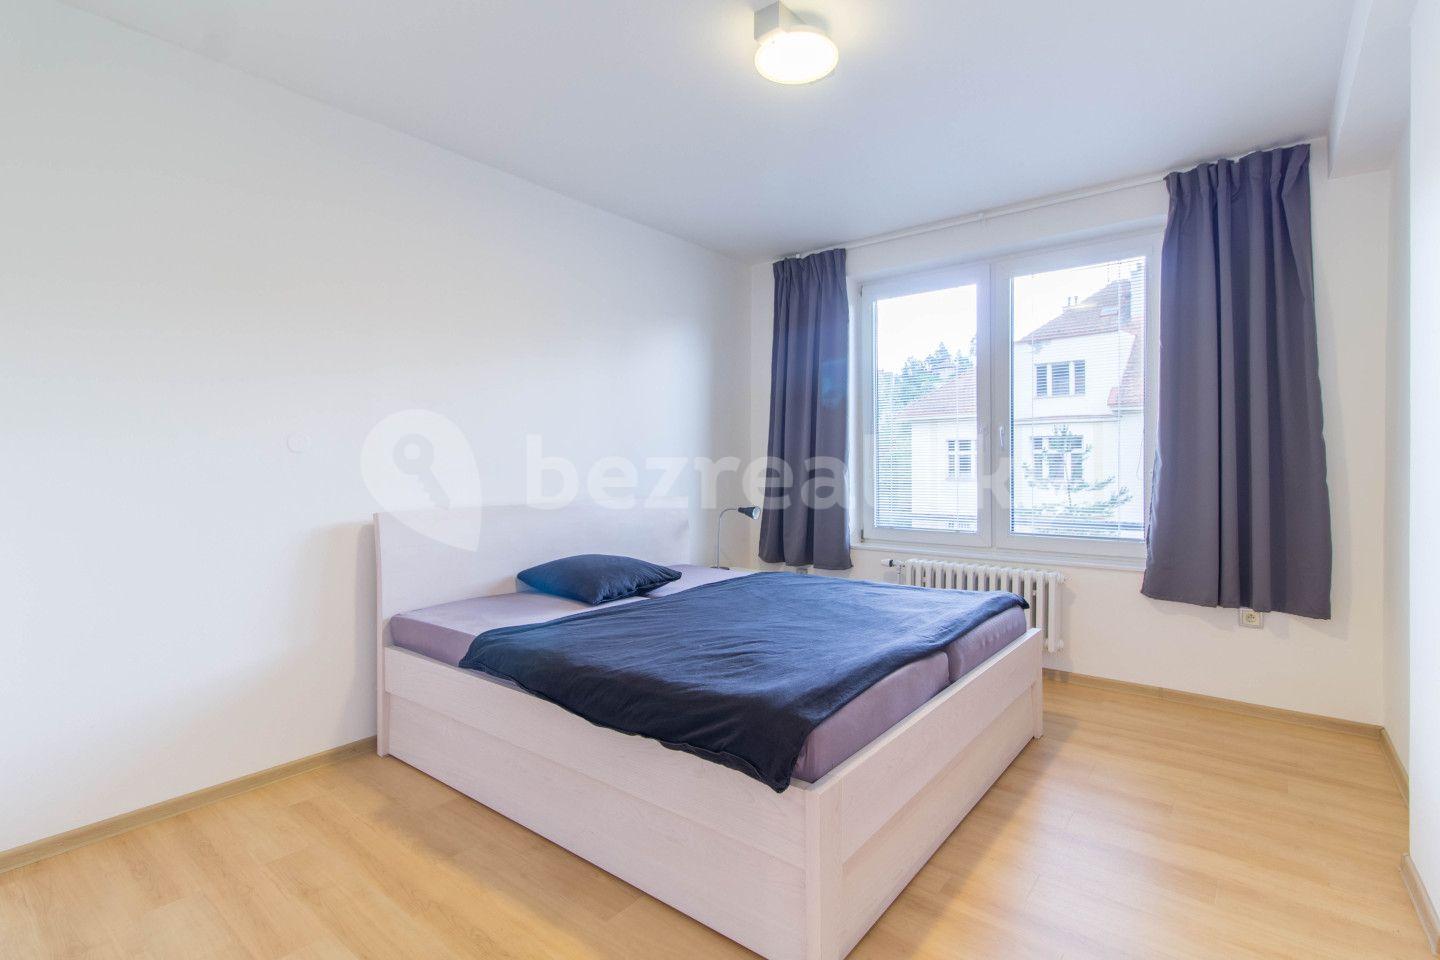 1 bedroom with open-plan kitchen flat for sale, 54 m², Jeremenkova, Prague, Prague